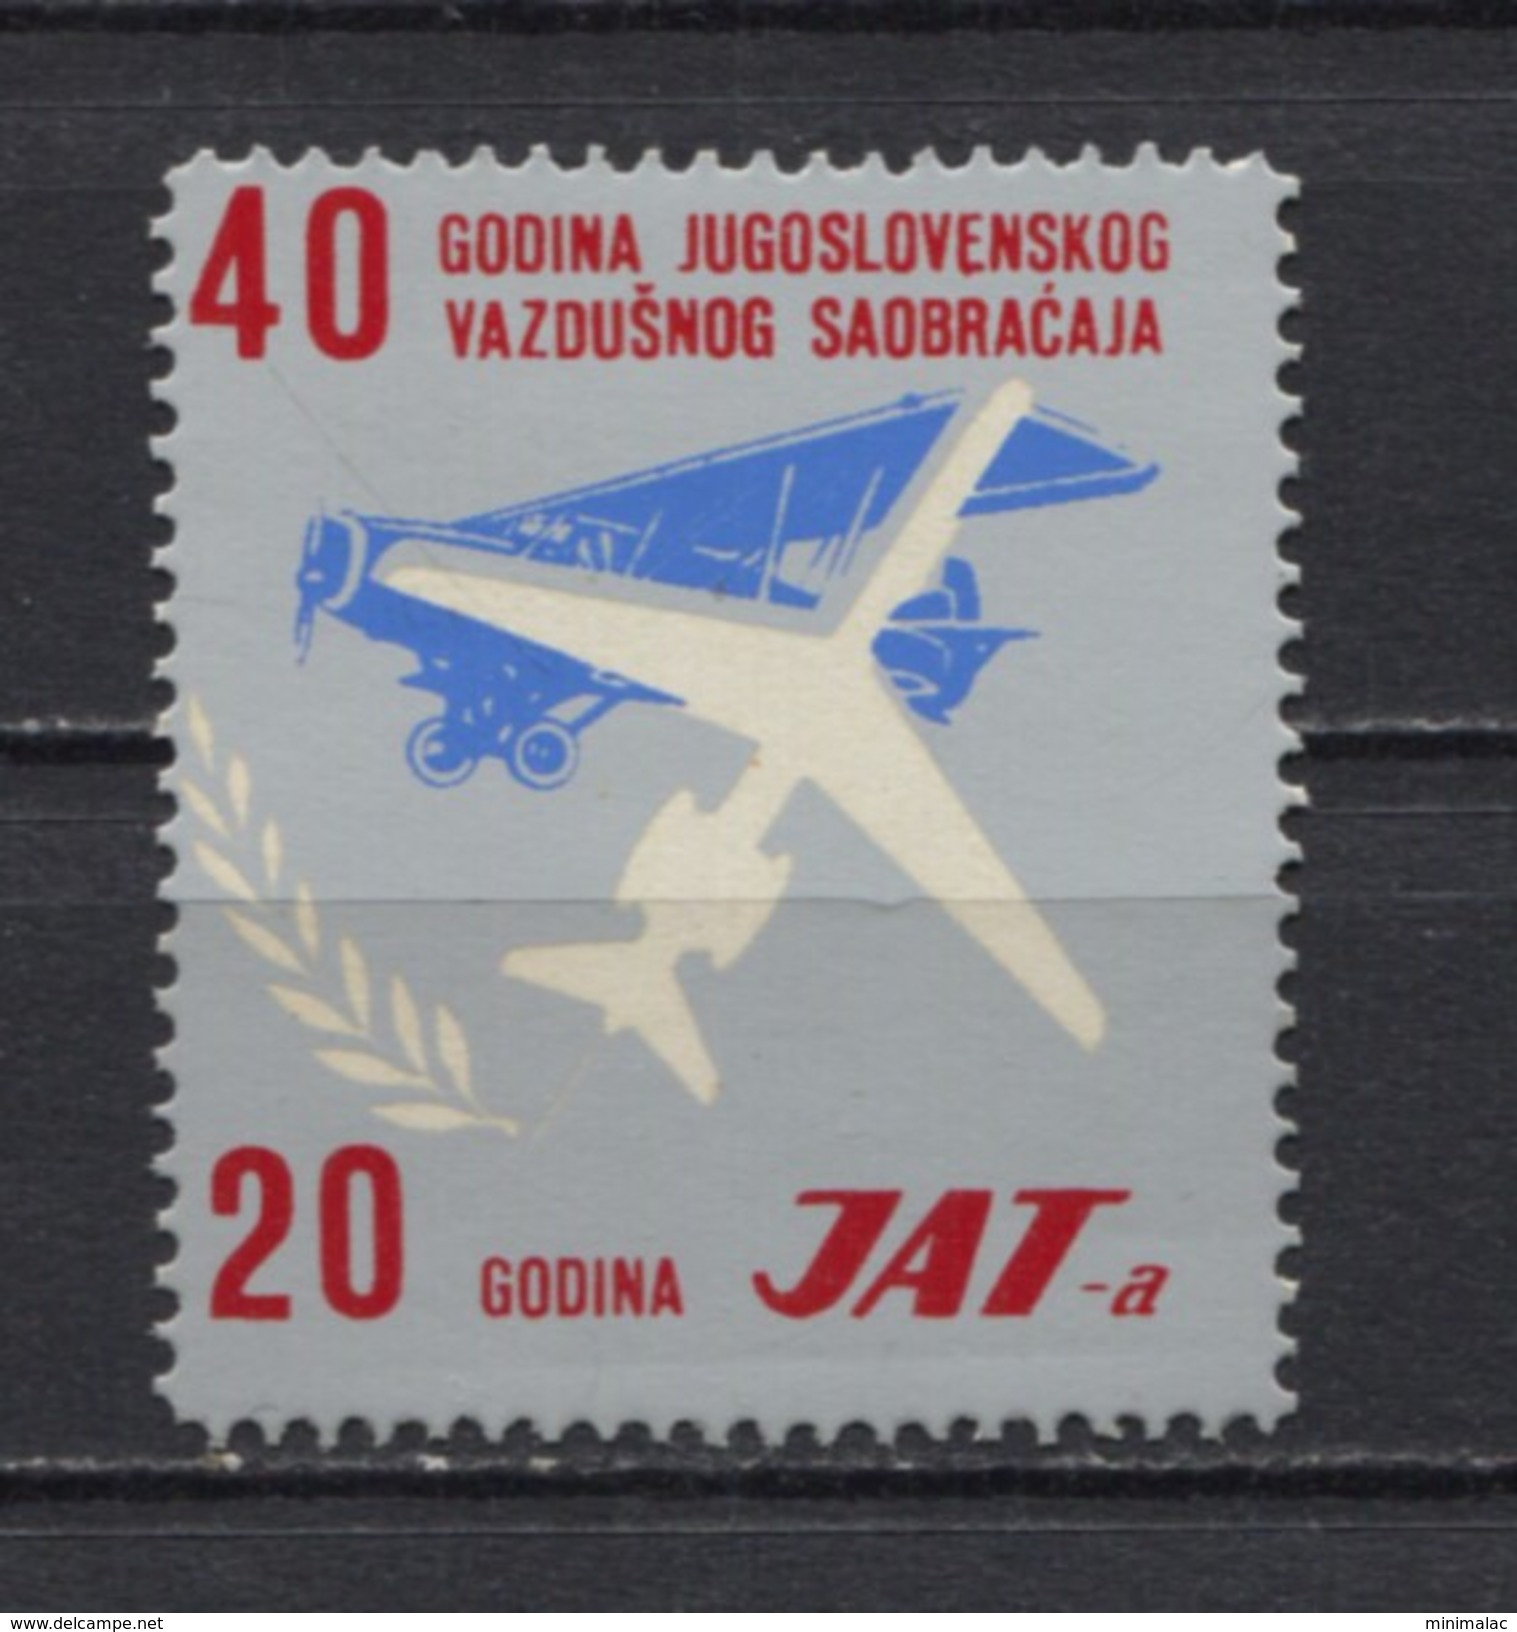 Yugoslavia 1967, 40th Anniversary Of Yugoslav Air Traffic, Yugoslav Airlines, JAT, Plane, Cinderella, Additional,  MNH - Airmail